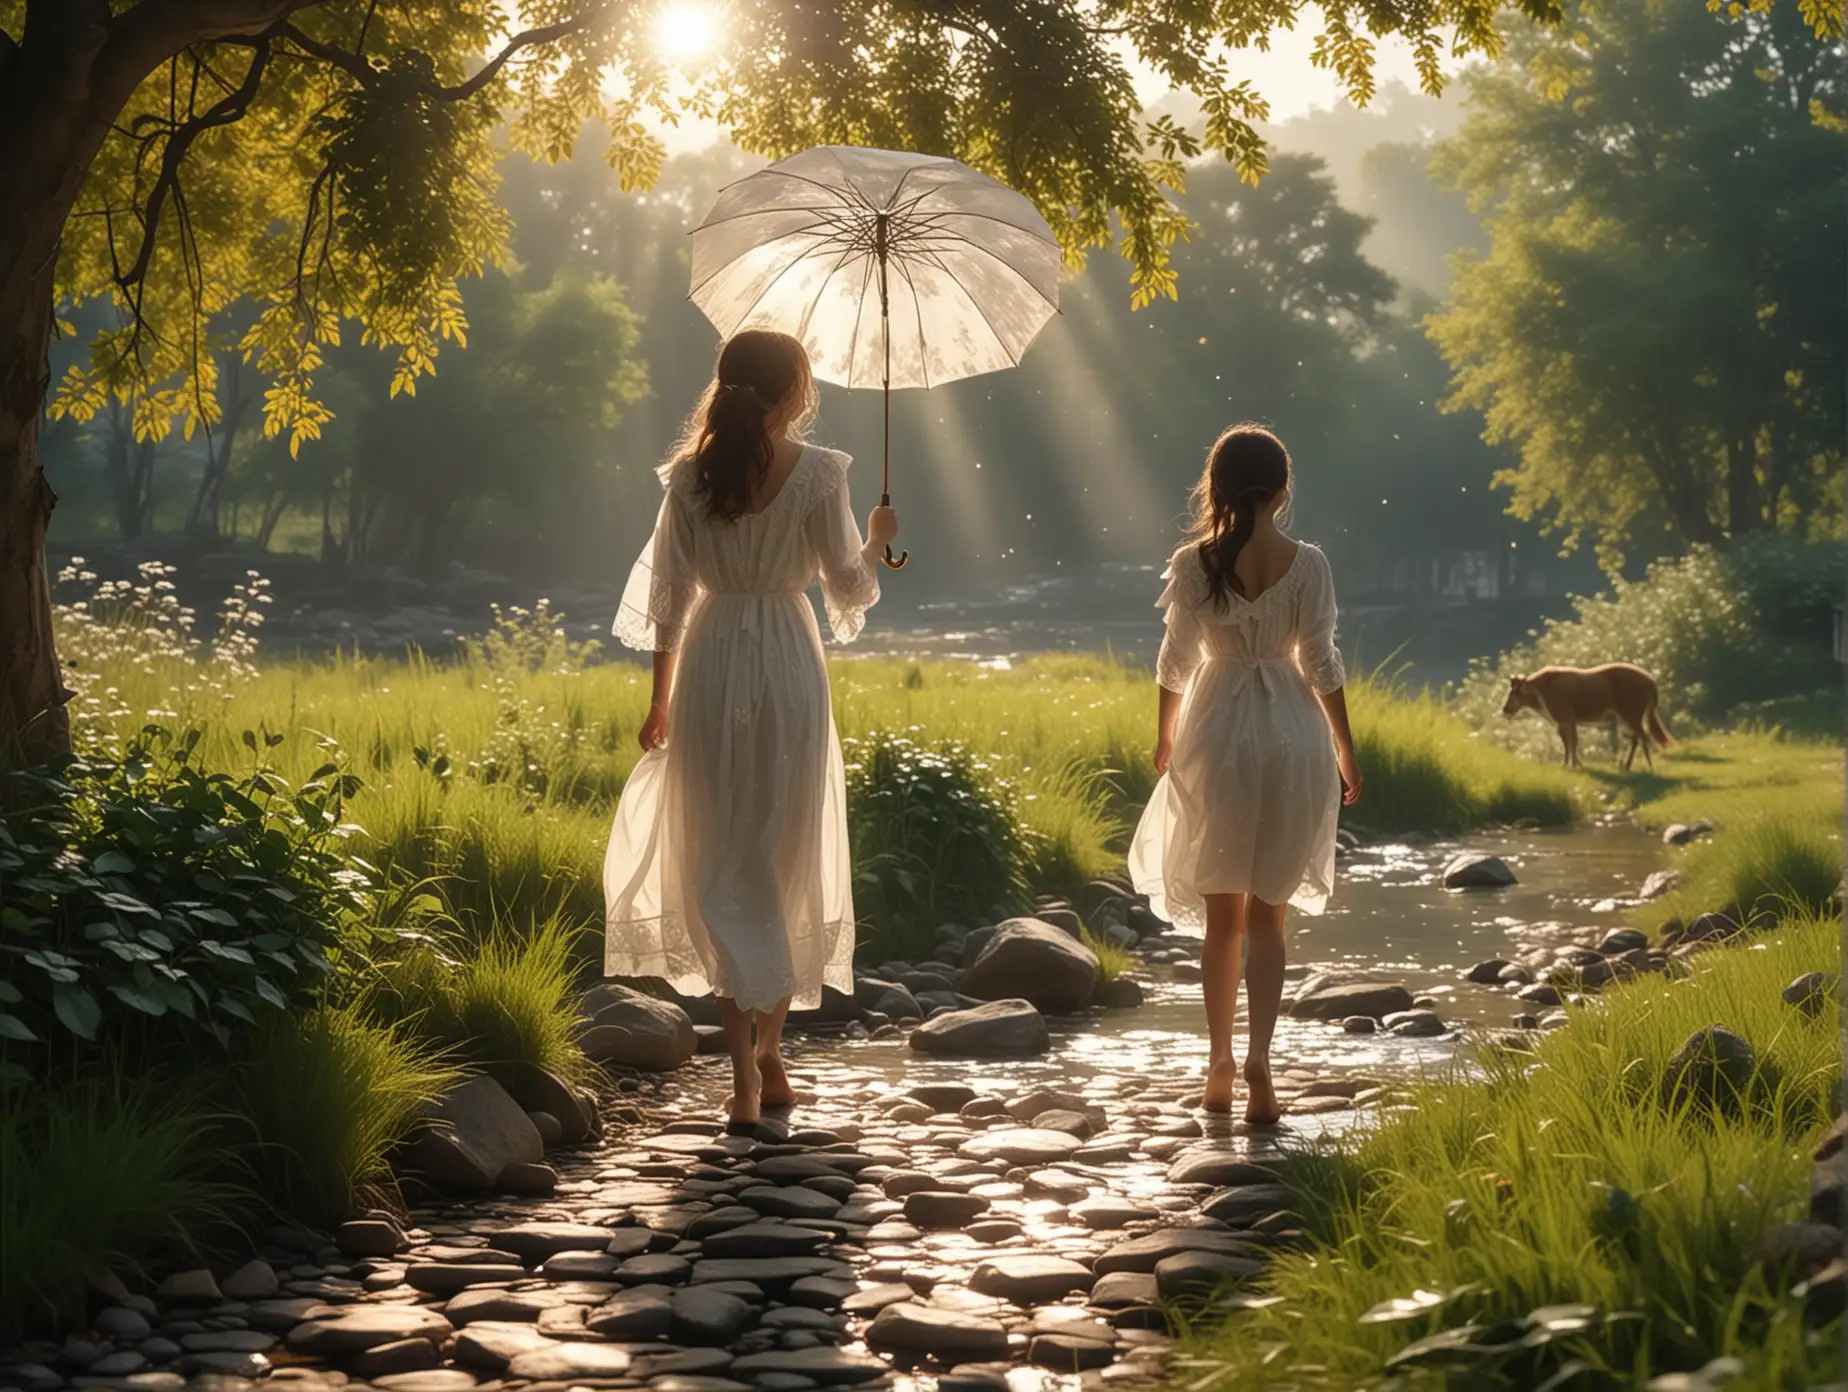 Girl-with-Oil-Paper-Umbrella-Walking-Along-Cobblestone-Streets-in-Sunlit-Nature-Scene